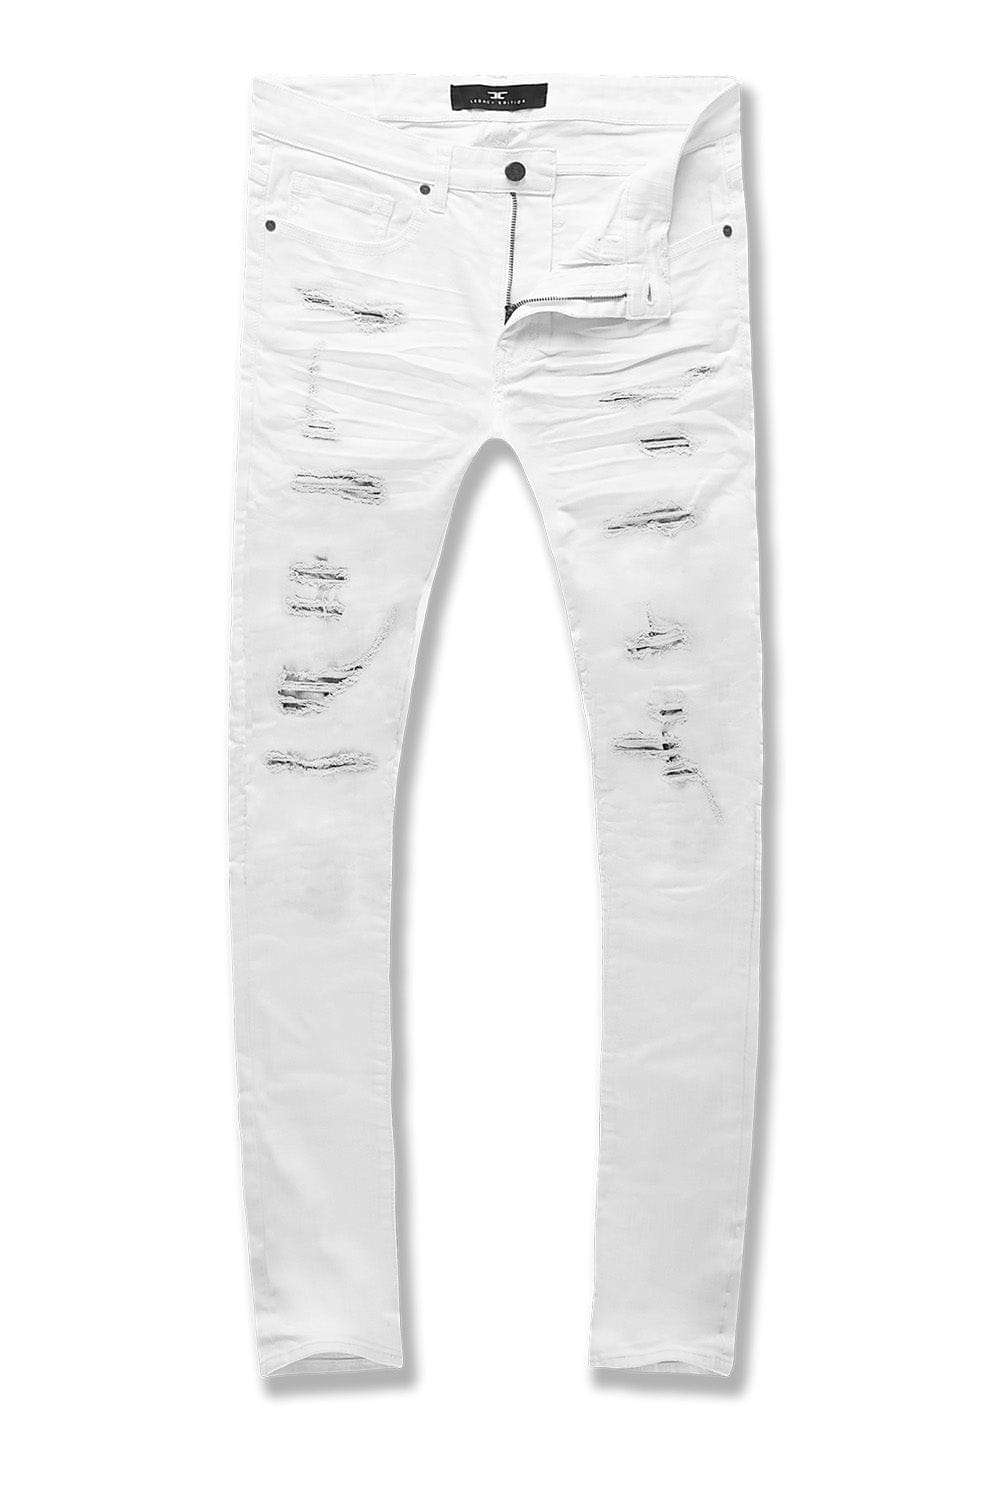 Jordan Craig Ross - Tribeca Twill Pants (Core Colors) White / 28/32